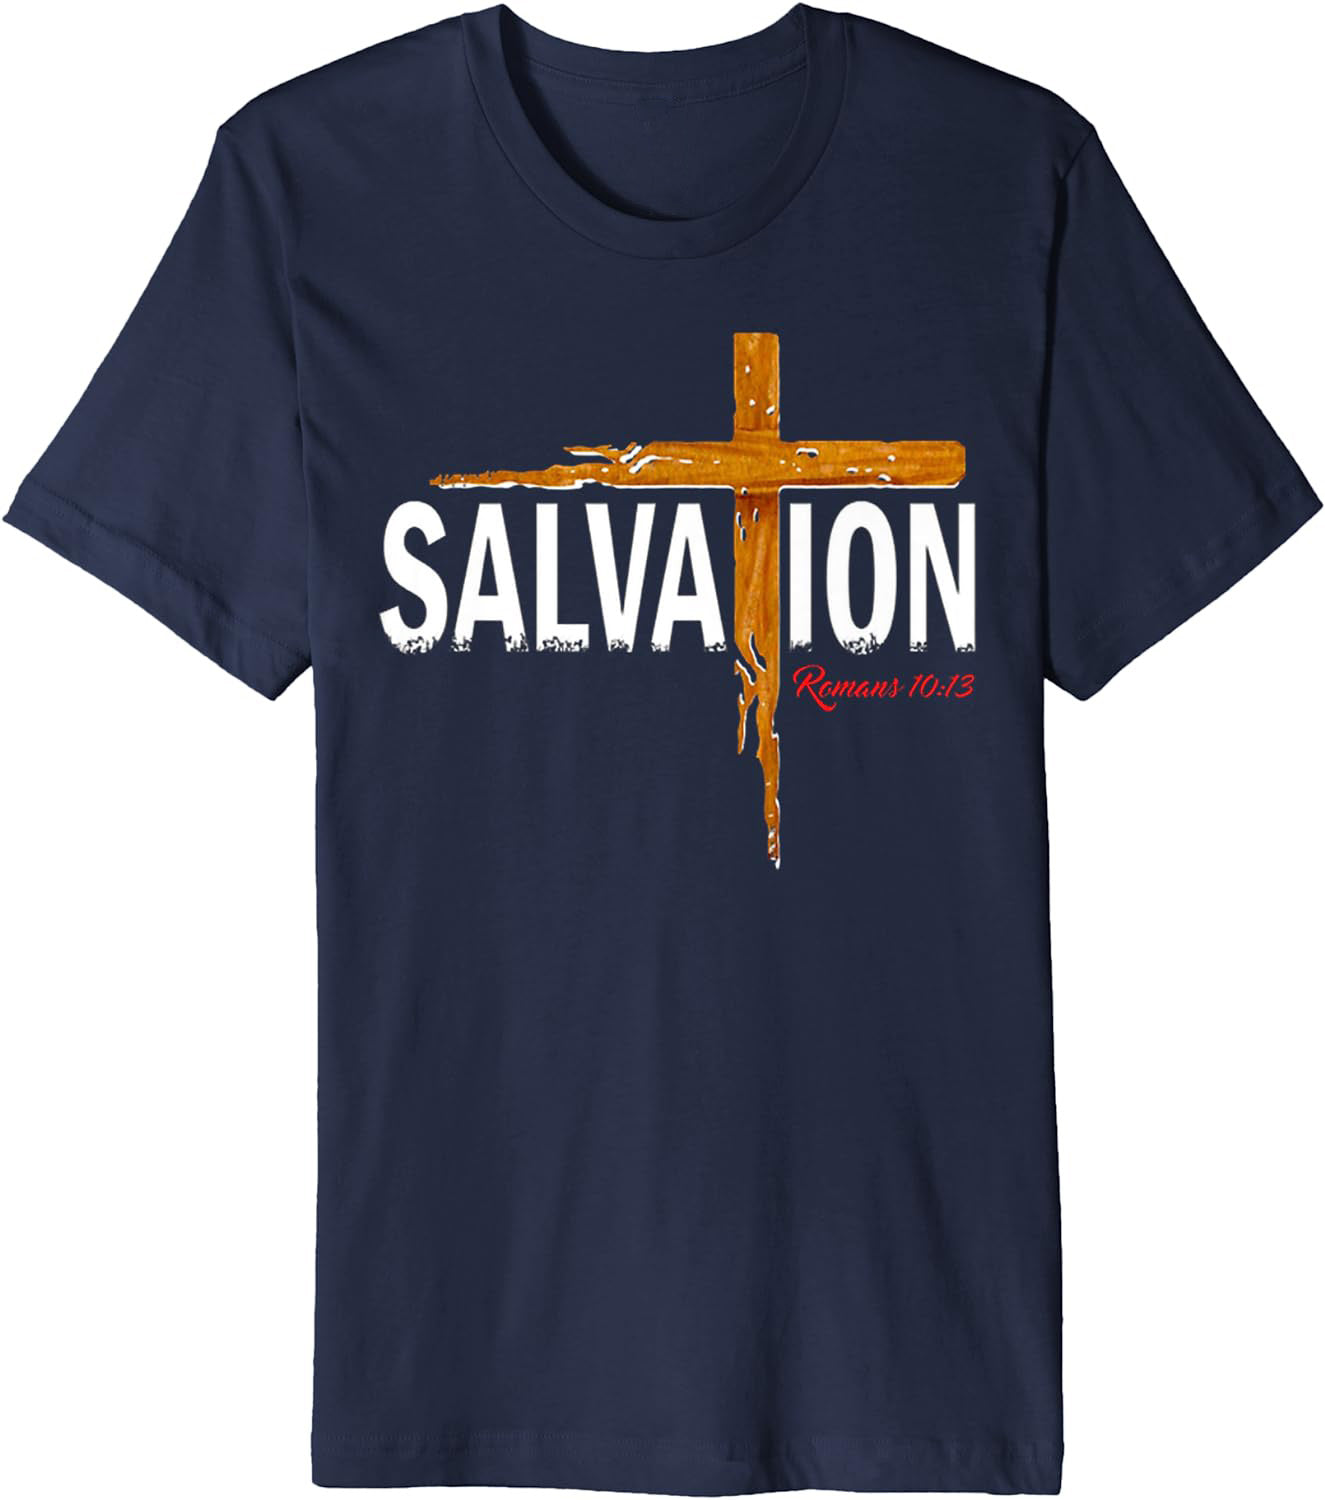 Salvation - Premium T-Shirt - Fun and Inspirational Design by Crucial Key